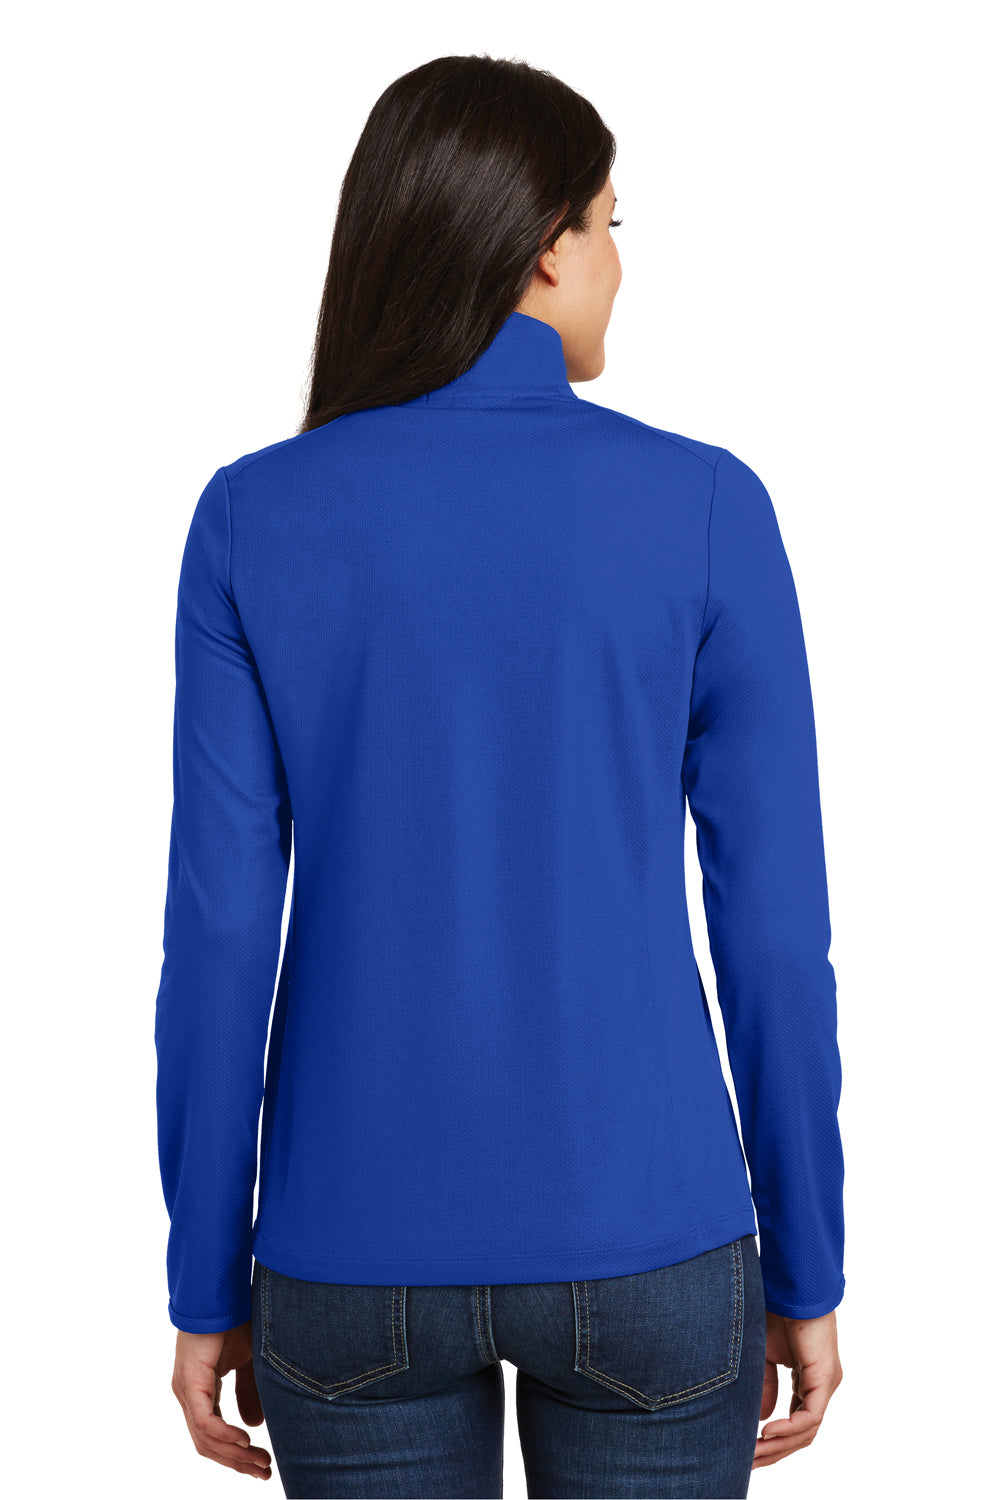 Port Authority L806 Womens Moisture Wicking 1/4 Zip Sweatshirt Royal Blue Back